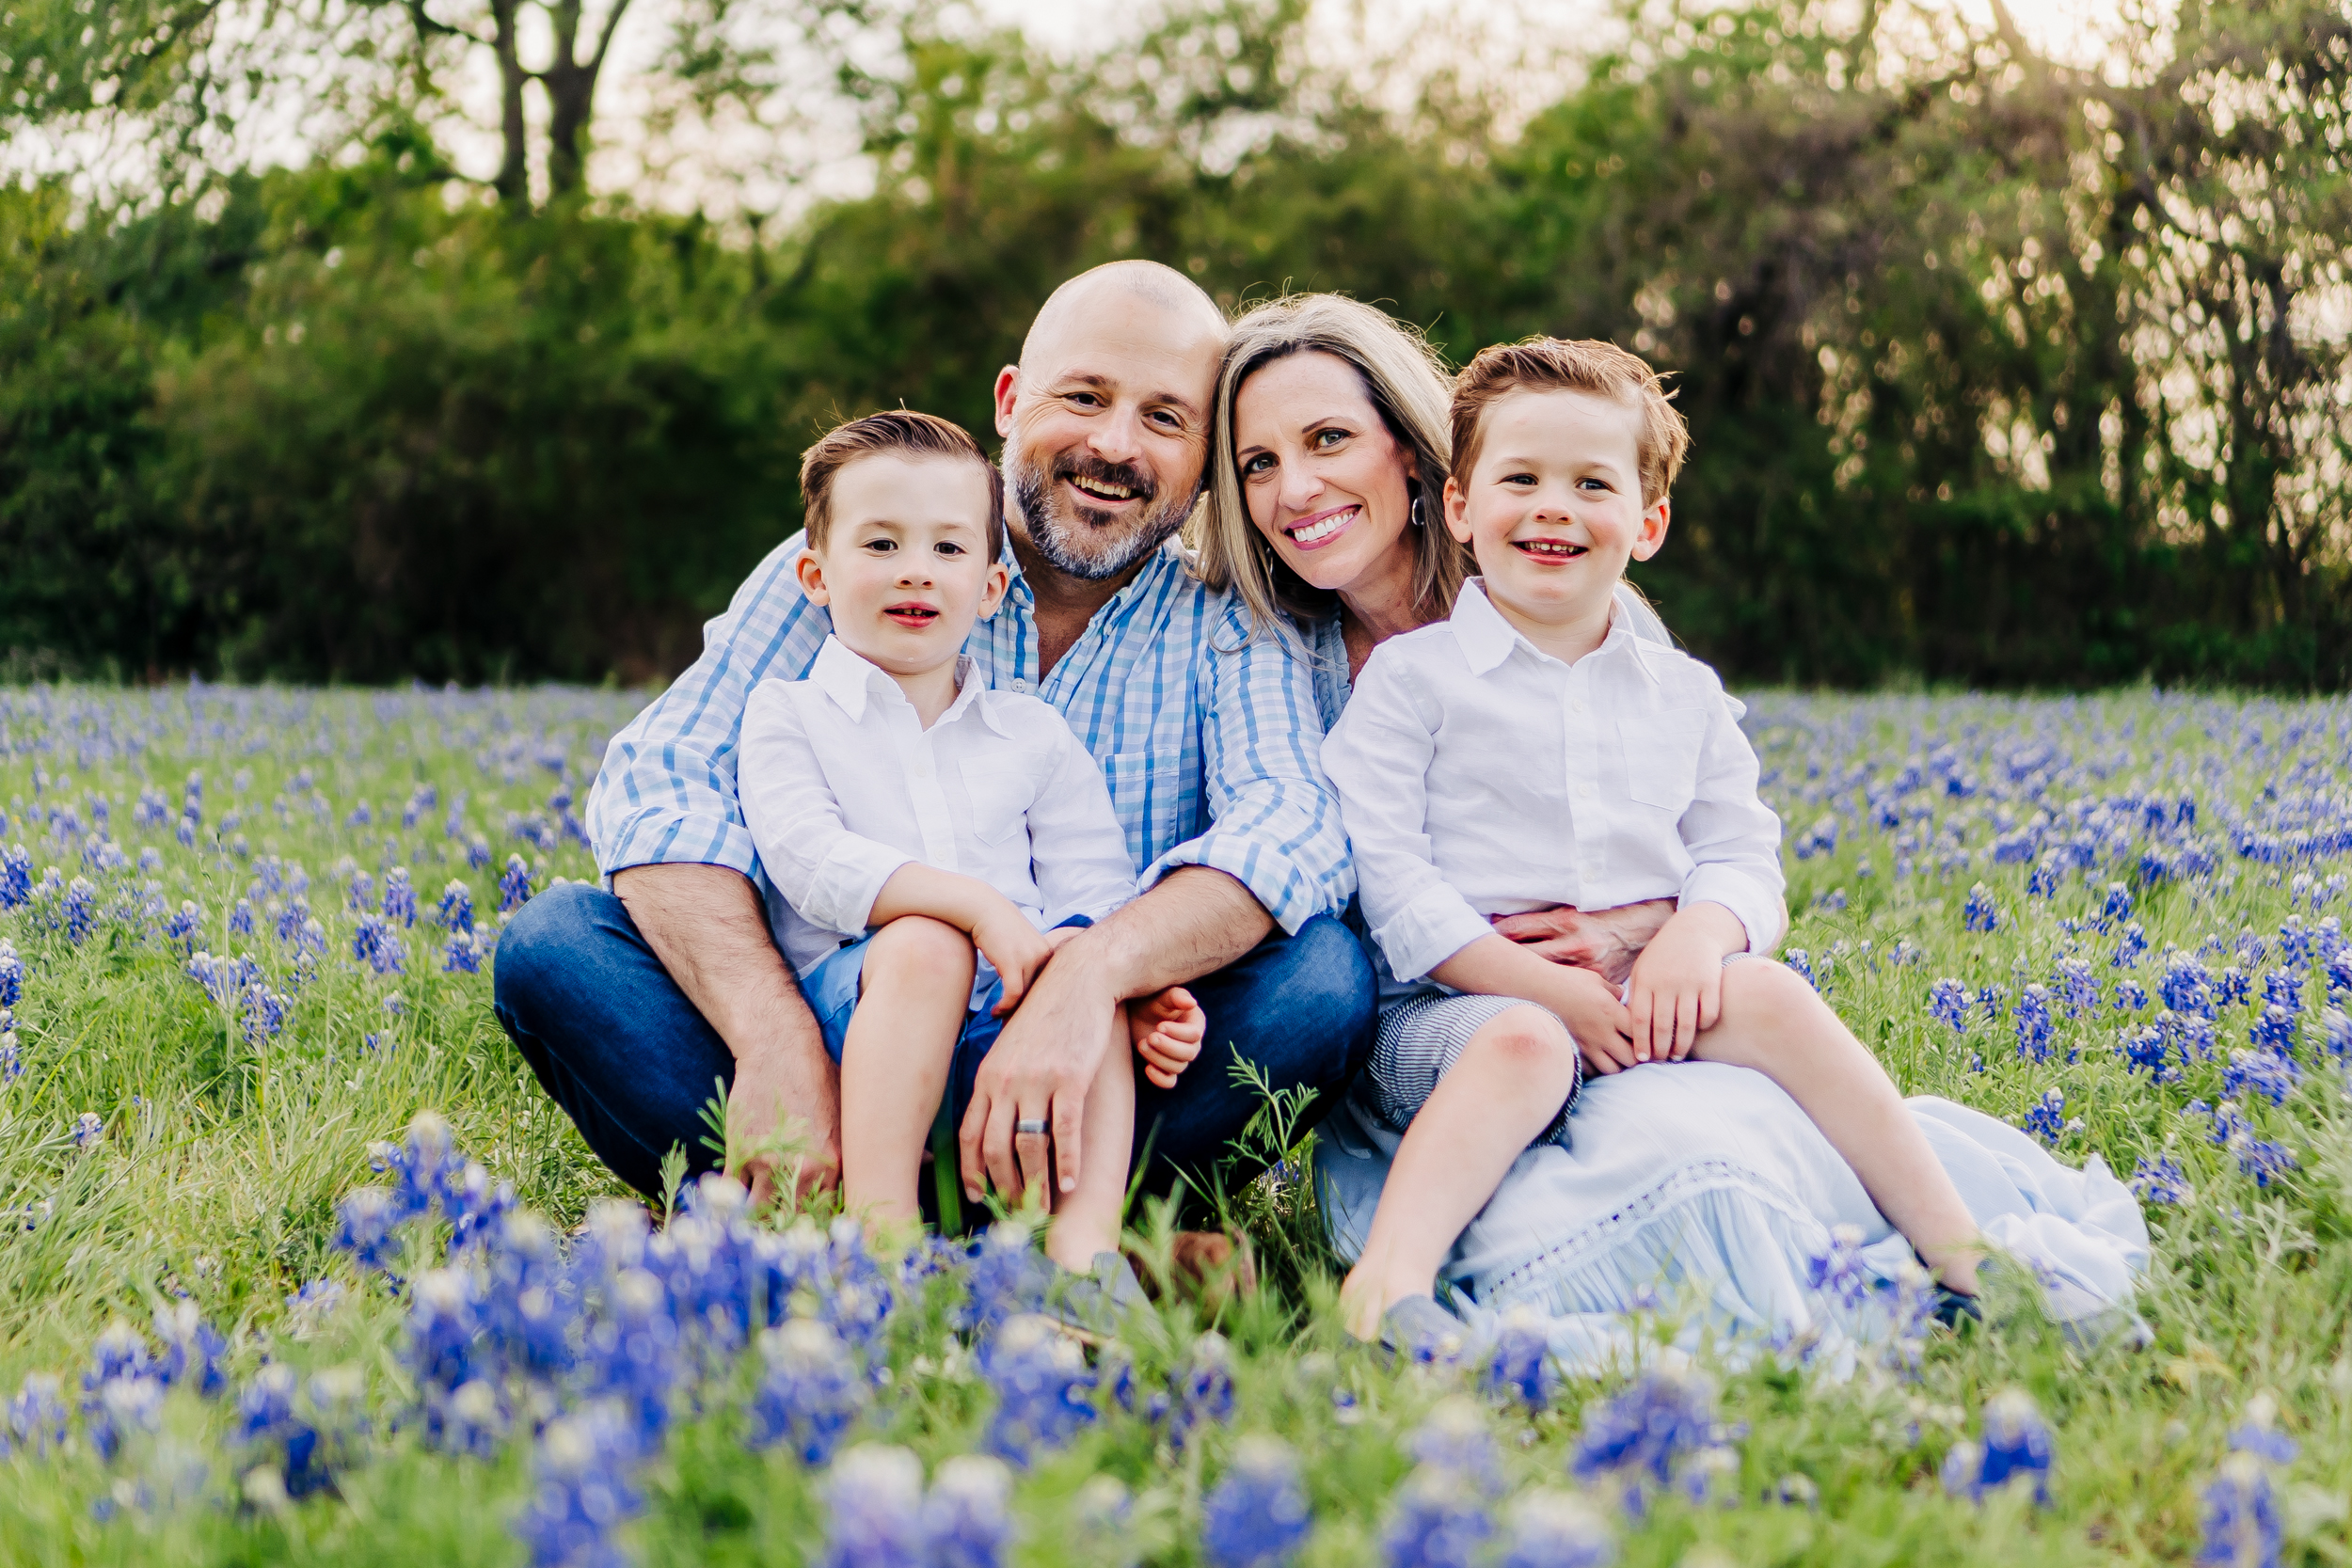 How to have stress free family bluebonnet photos | Plano, Texas Family Photographer | via brittnierenee.com